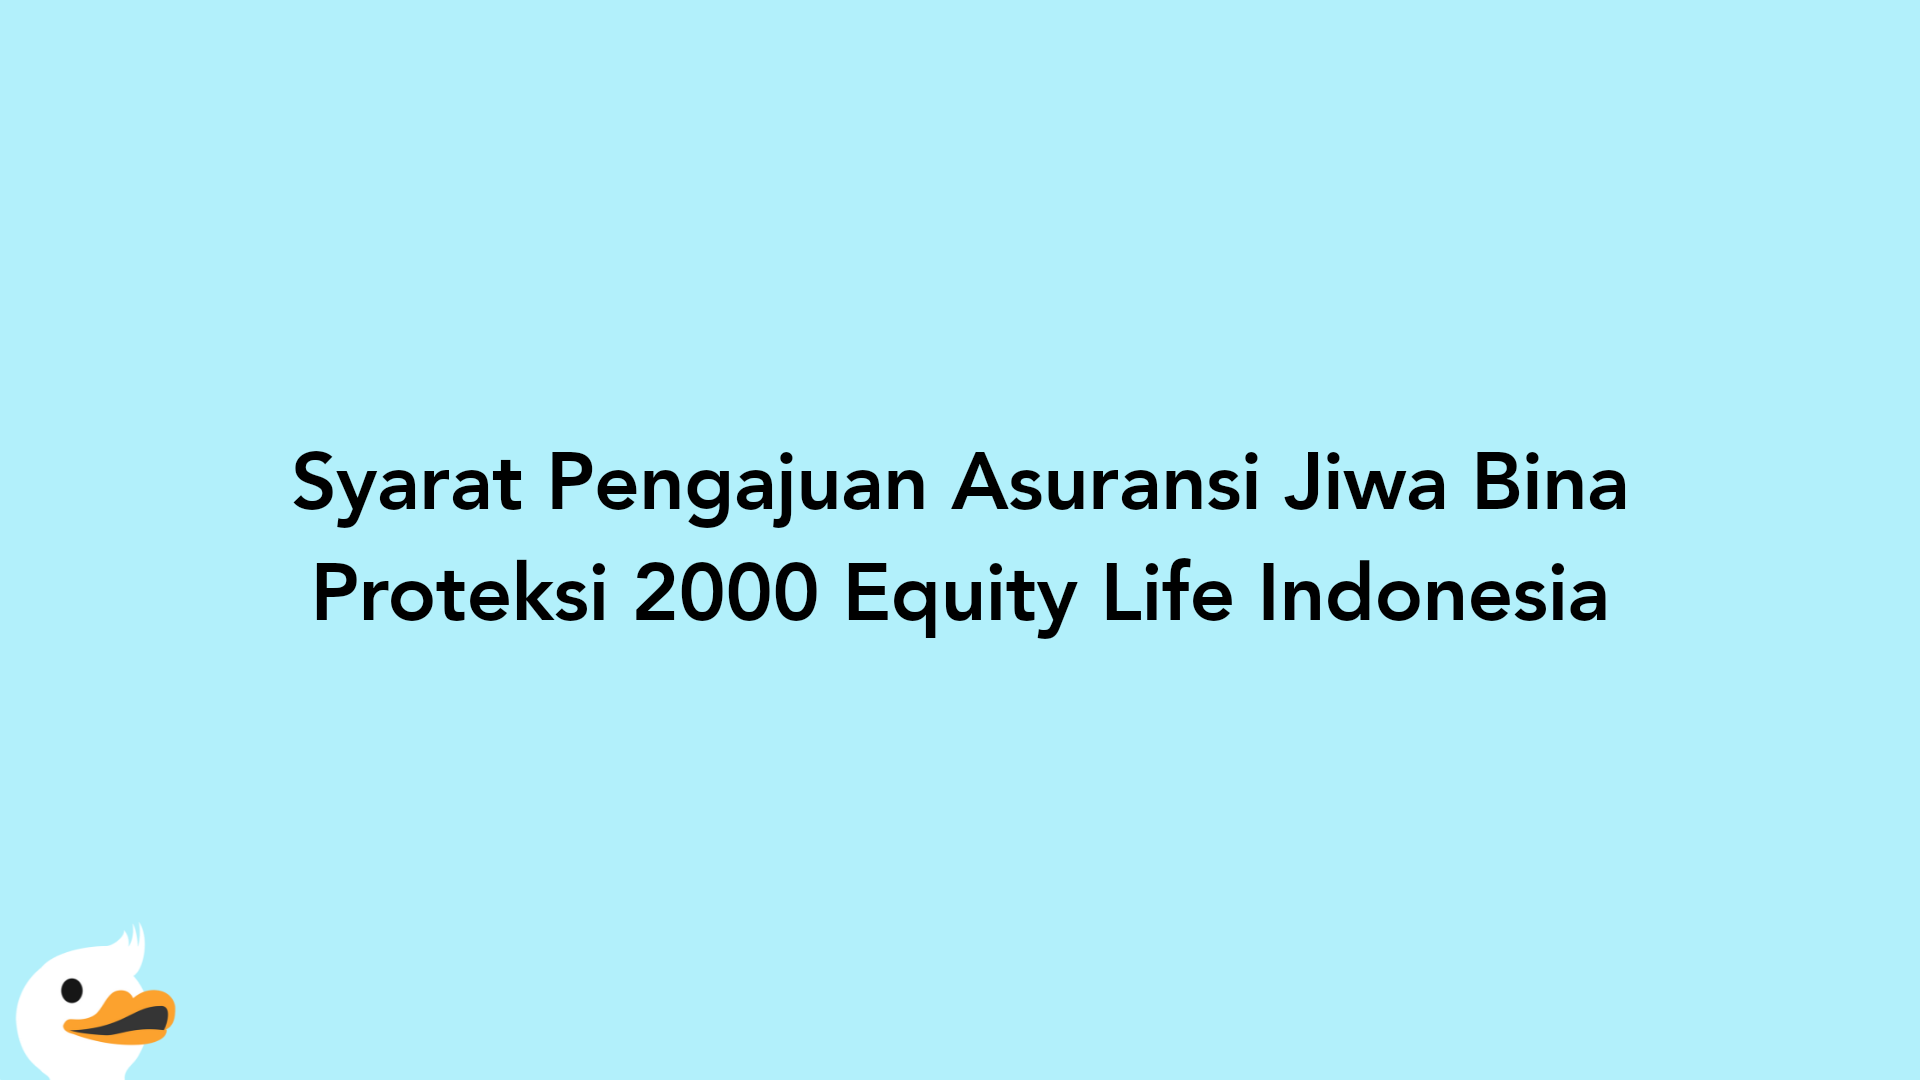 Syarat Pengajuan Asuransi Jiwa Bina Proteksi 2000 Equity Life Indonesia